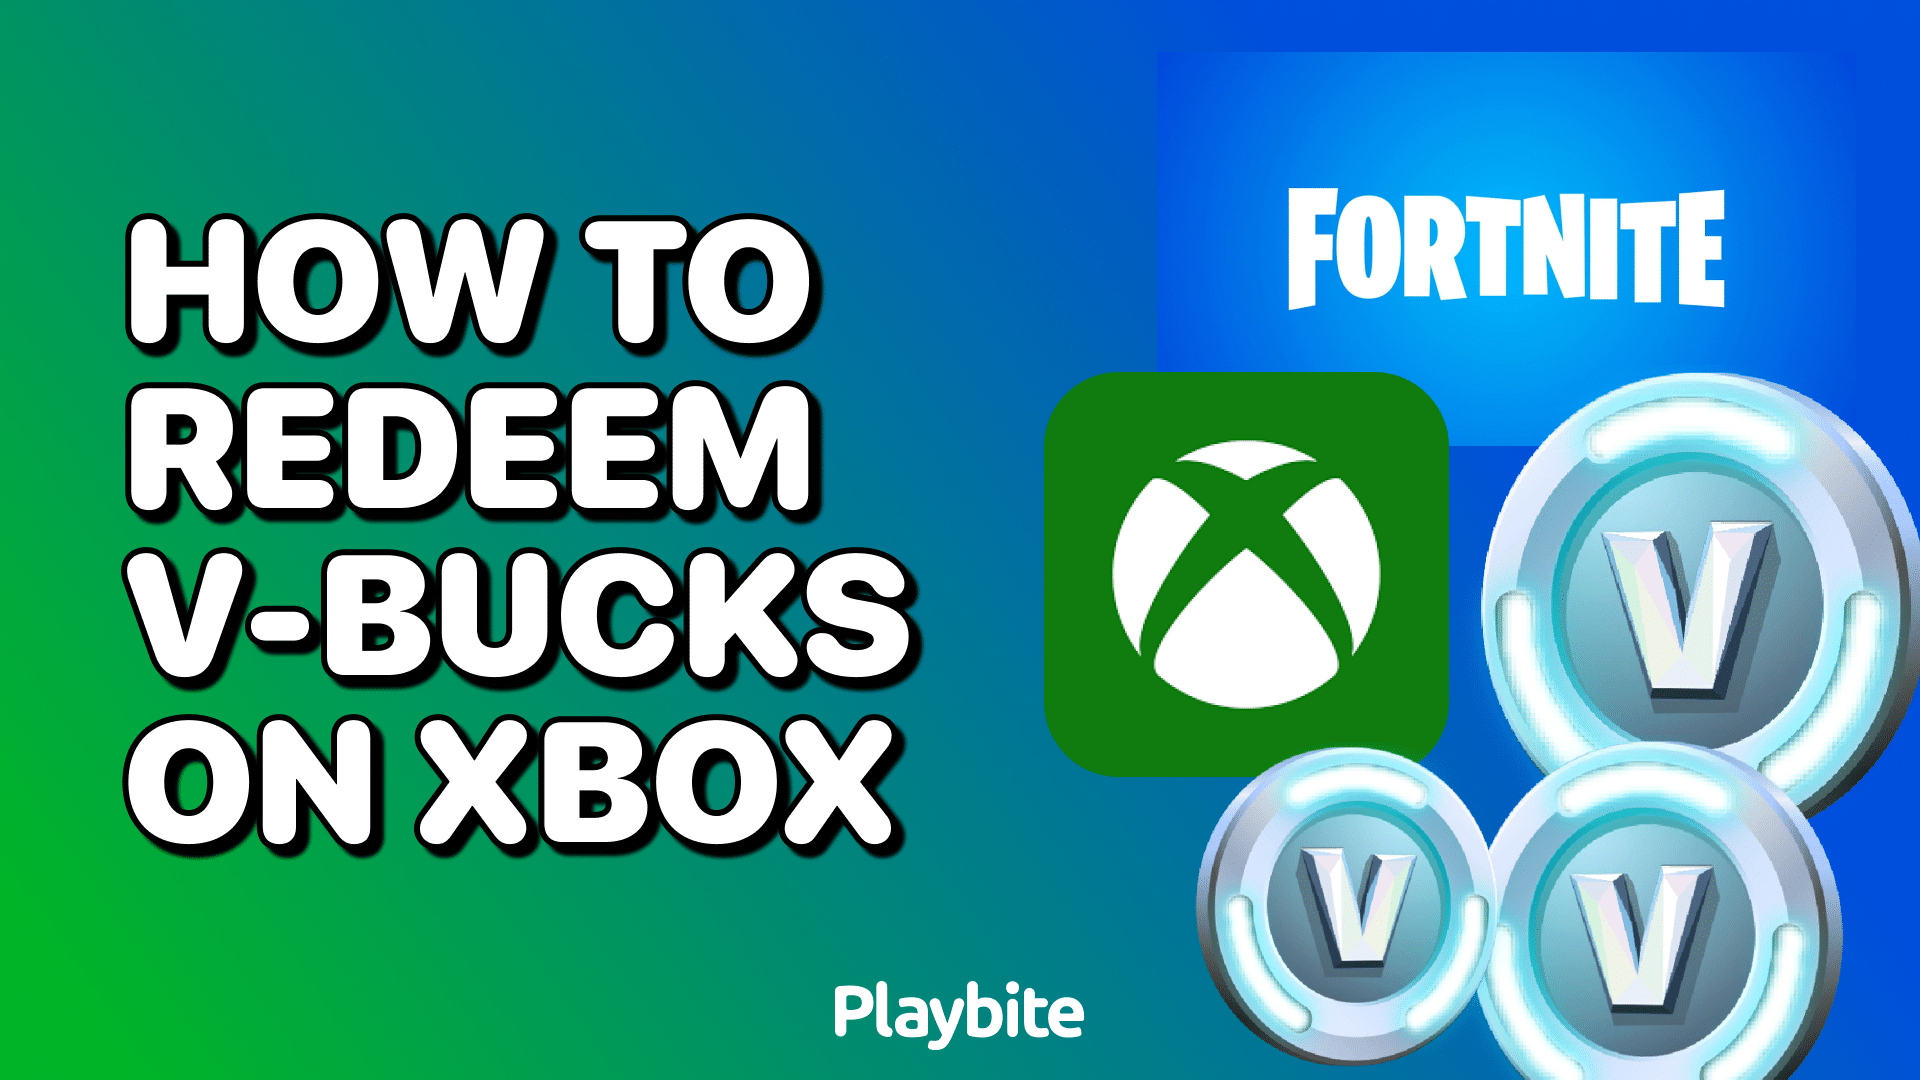 How To Redeem V-Bucks On Xbox